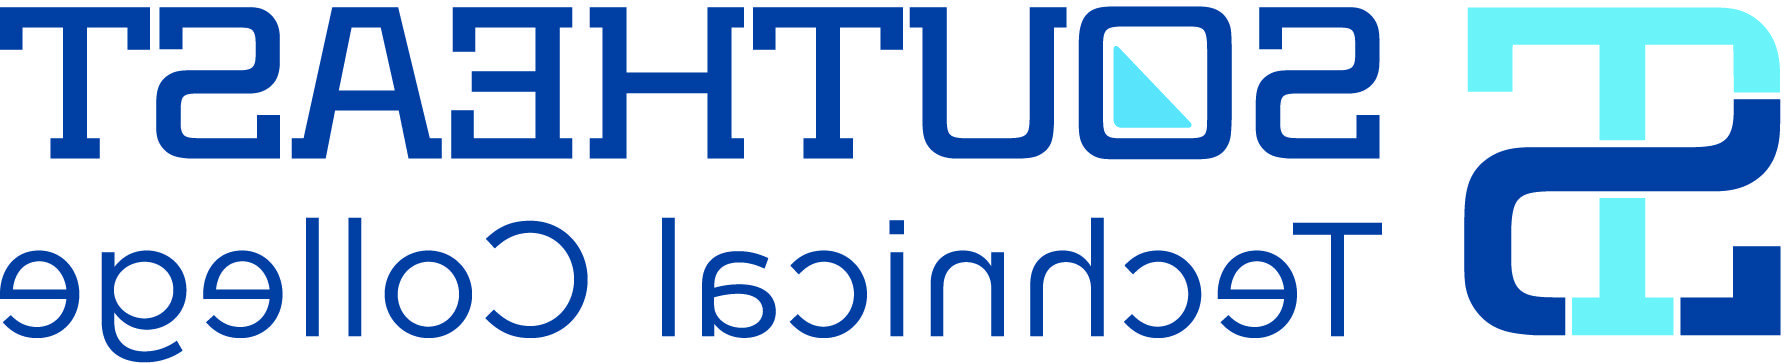 Southeast Technical College logo 和 monogram